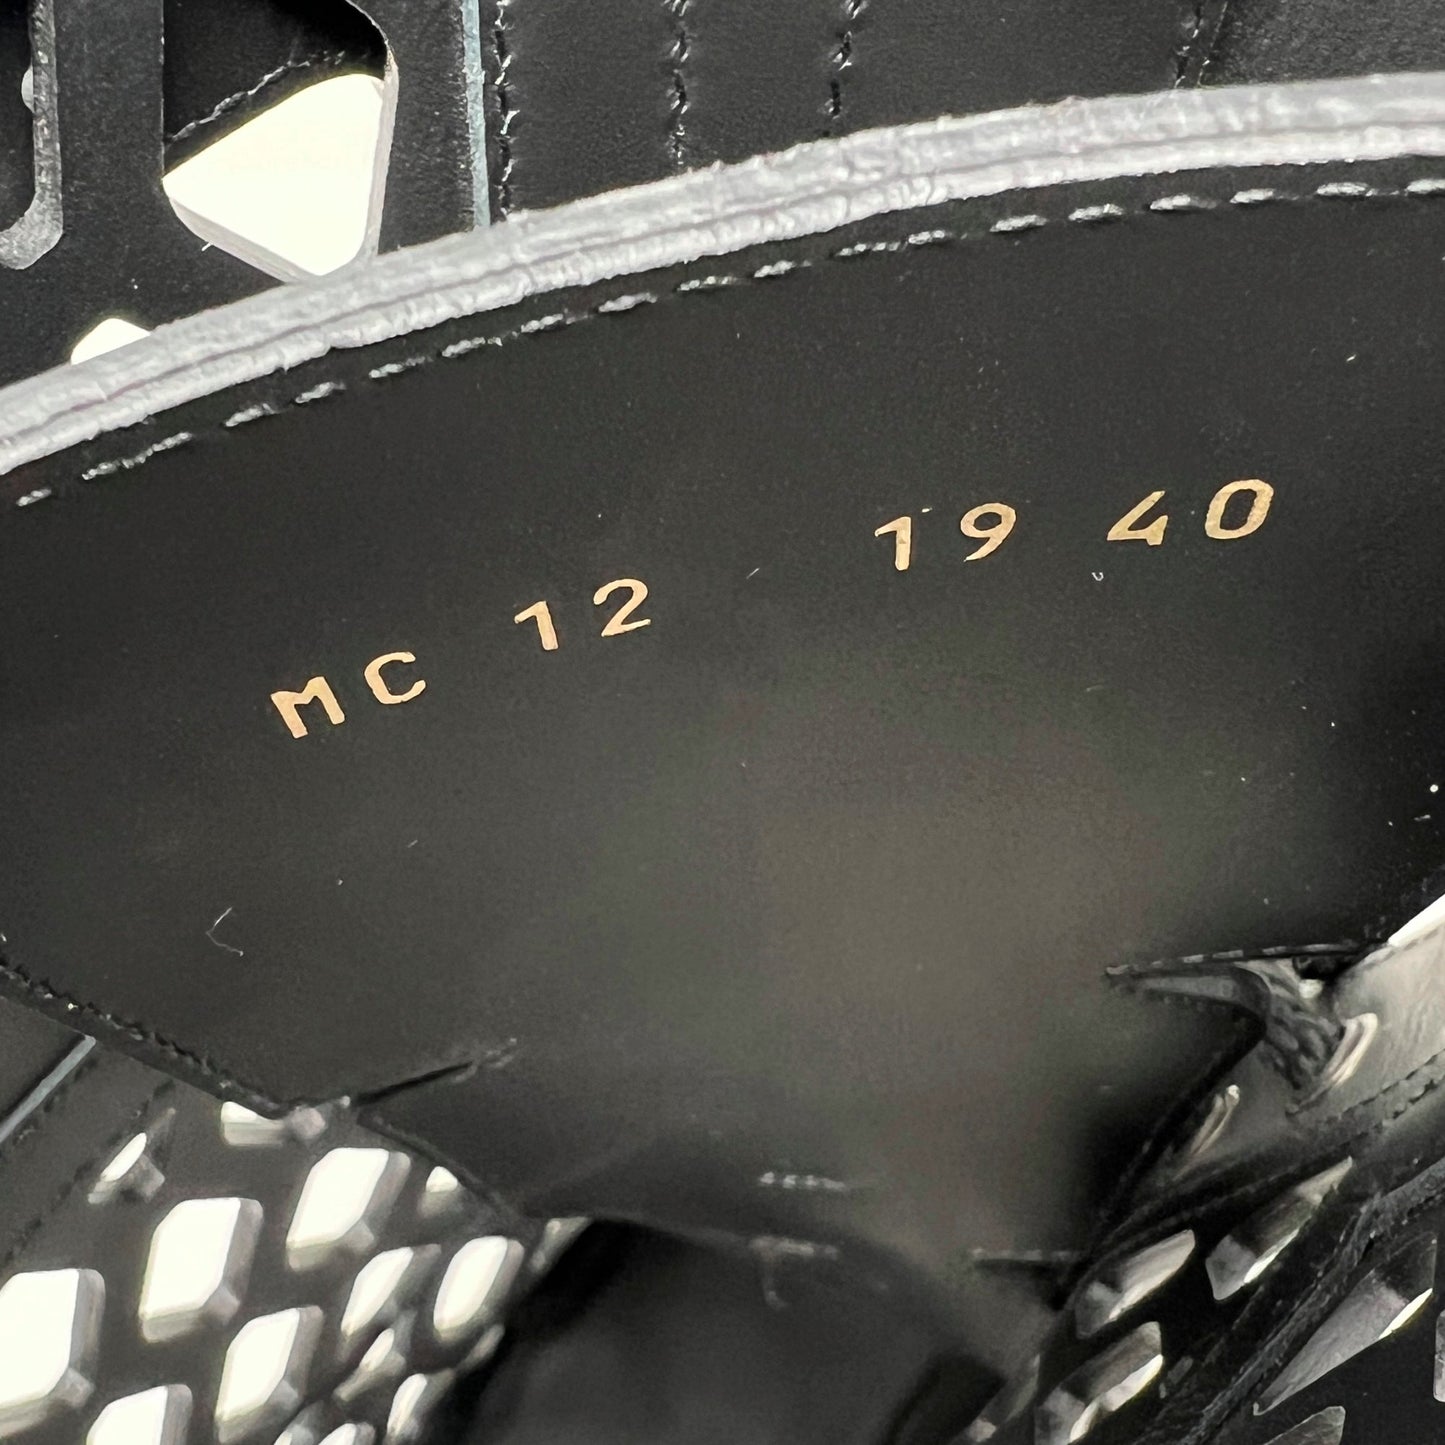 Christian Dior D- Trap Black Leather Mesh Laser Cut Out Lace Up Combat Boots Size EU 40